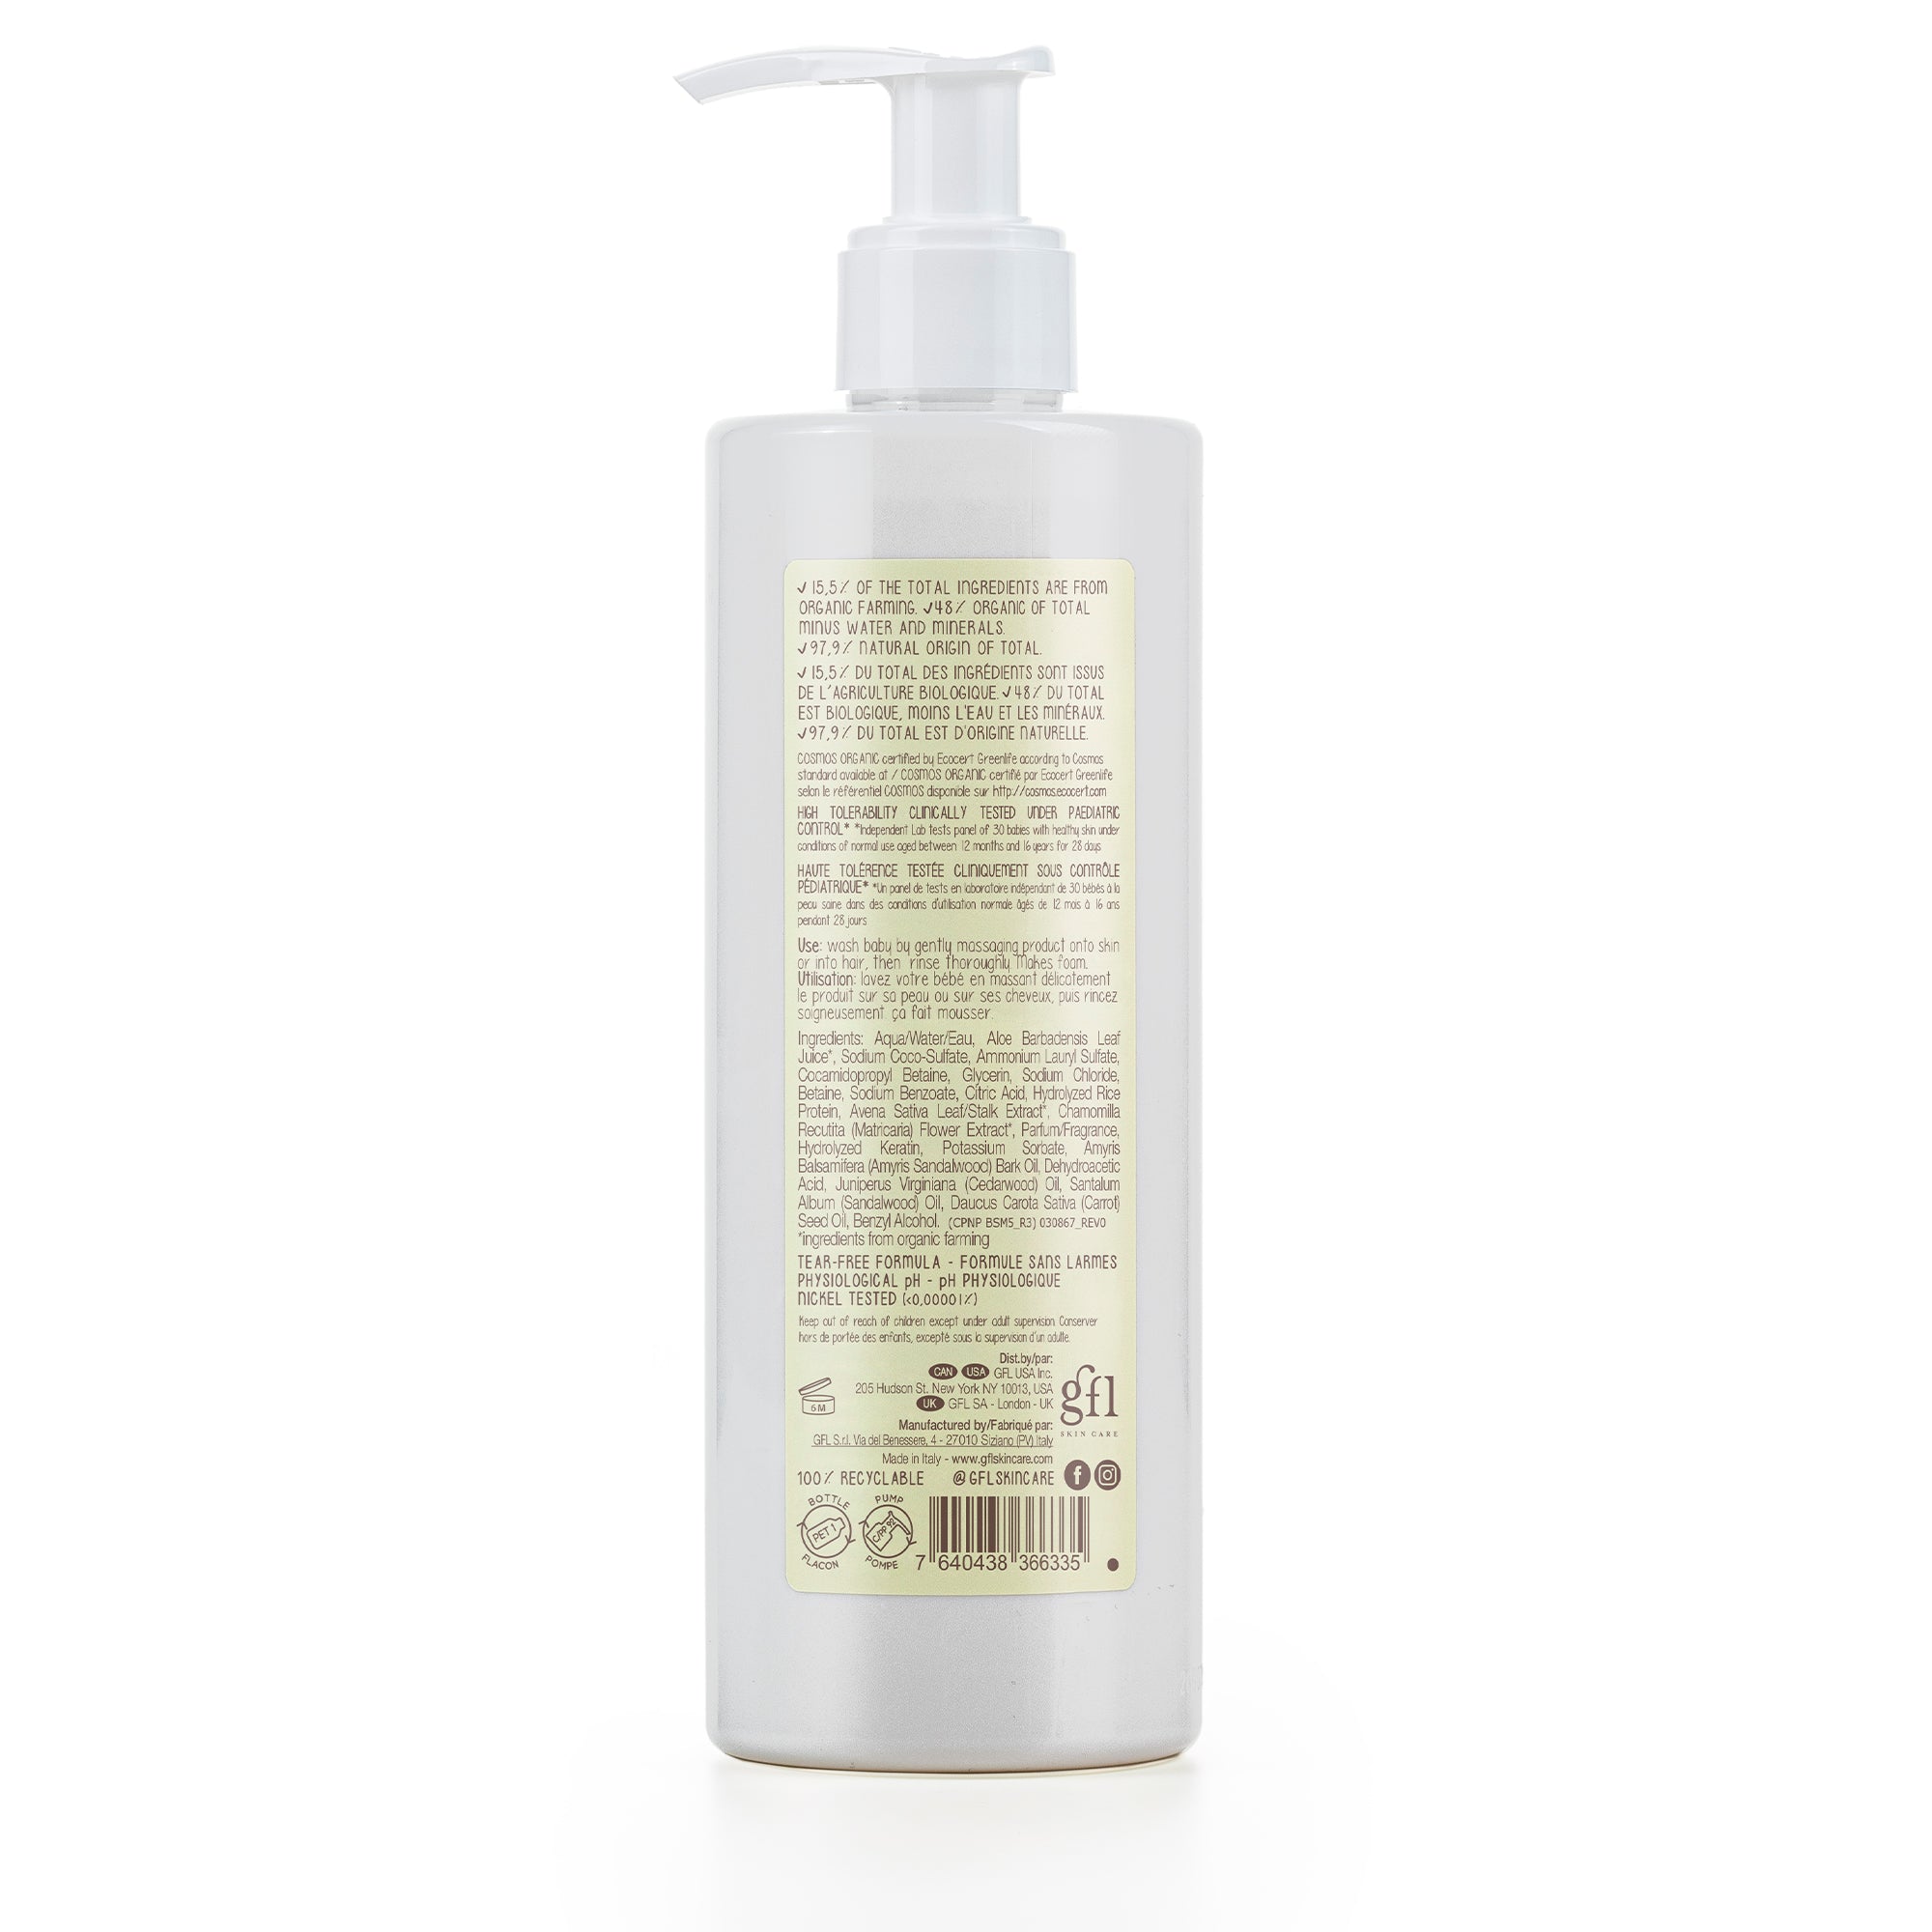 Dadaumpa 12months+ Wash And Shampoo Organic Certified (380 ml) in a pump dispenser